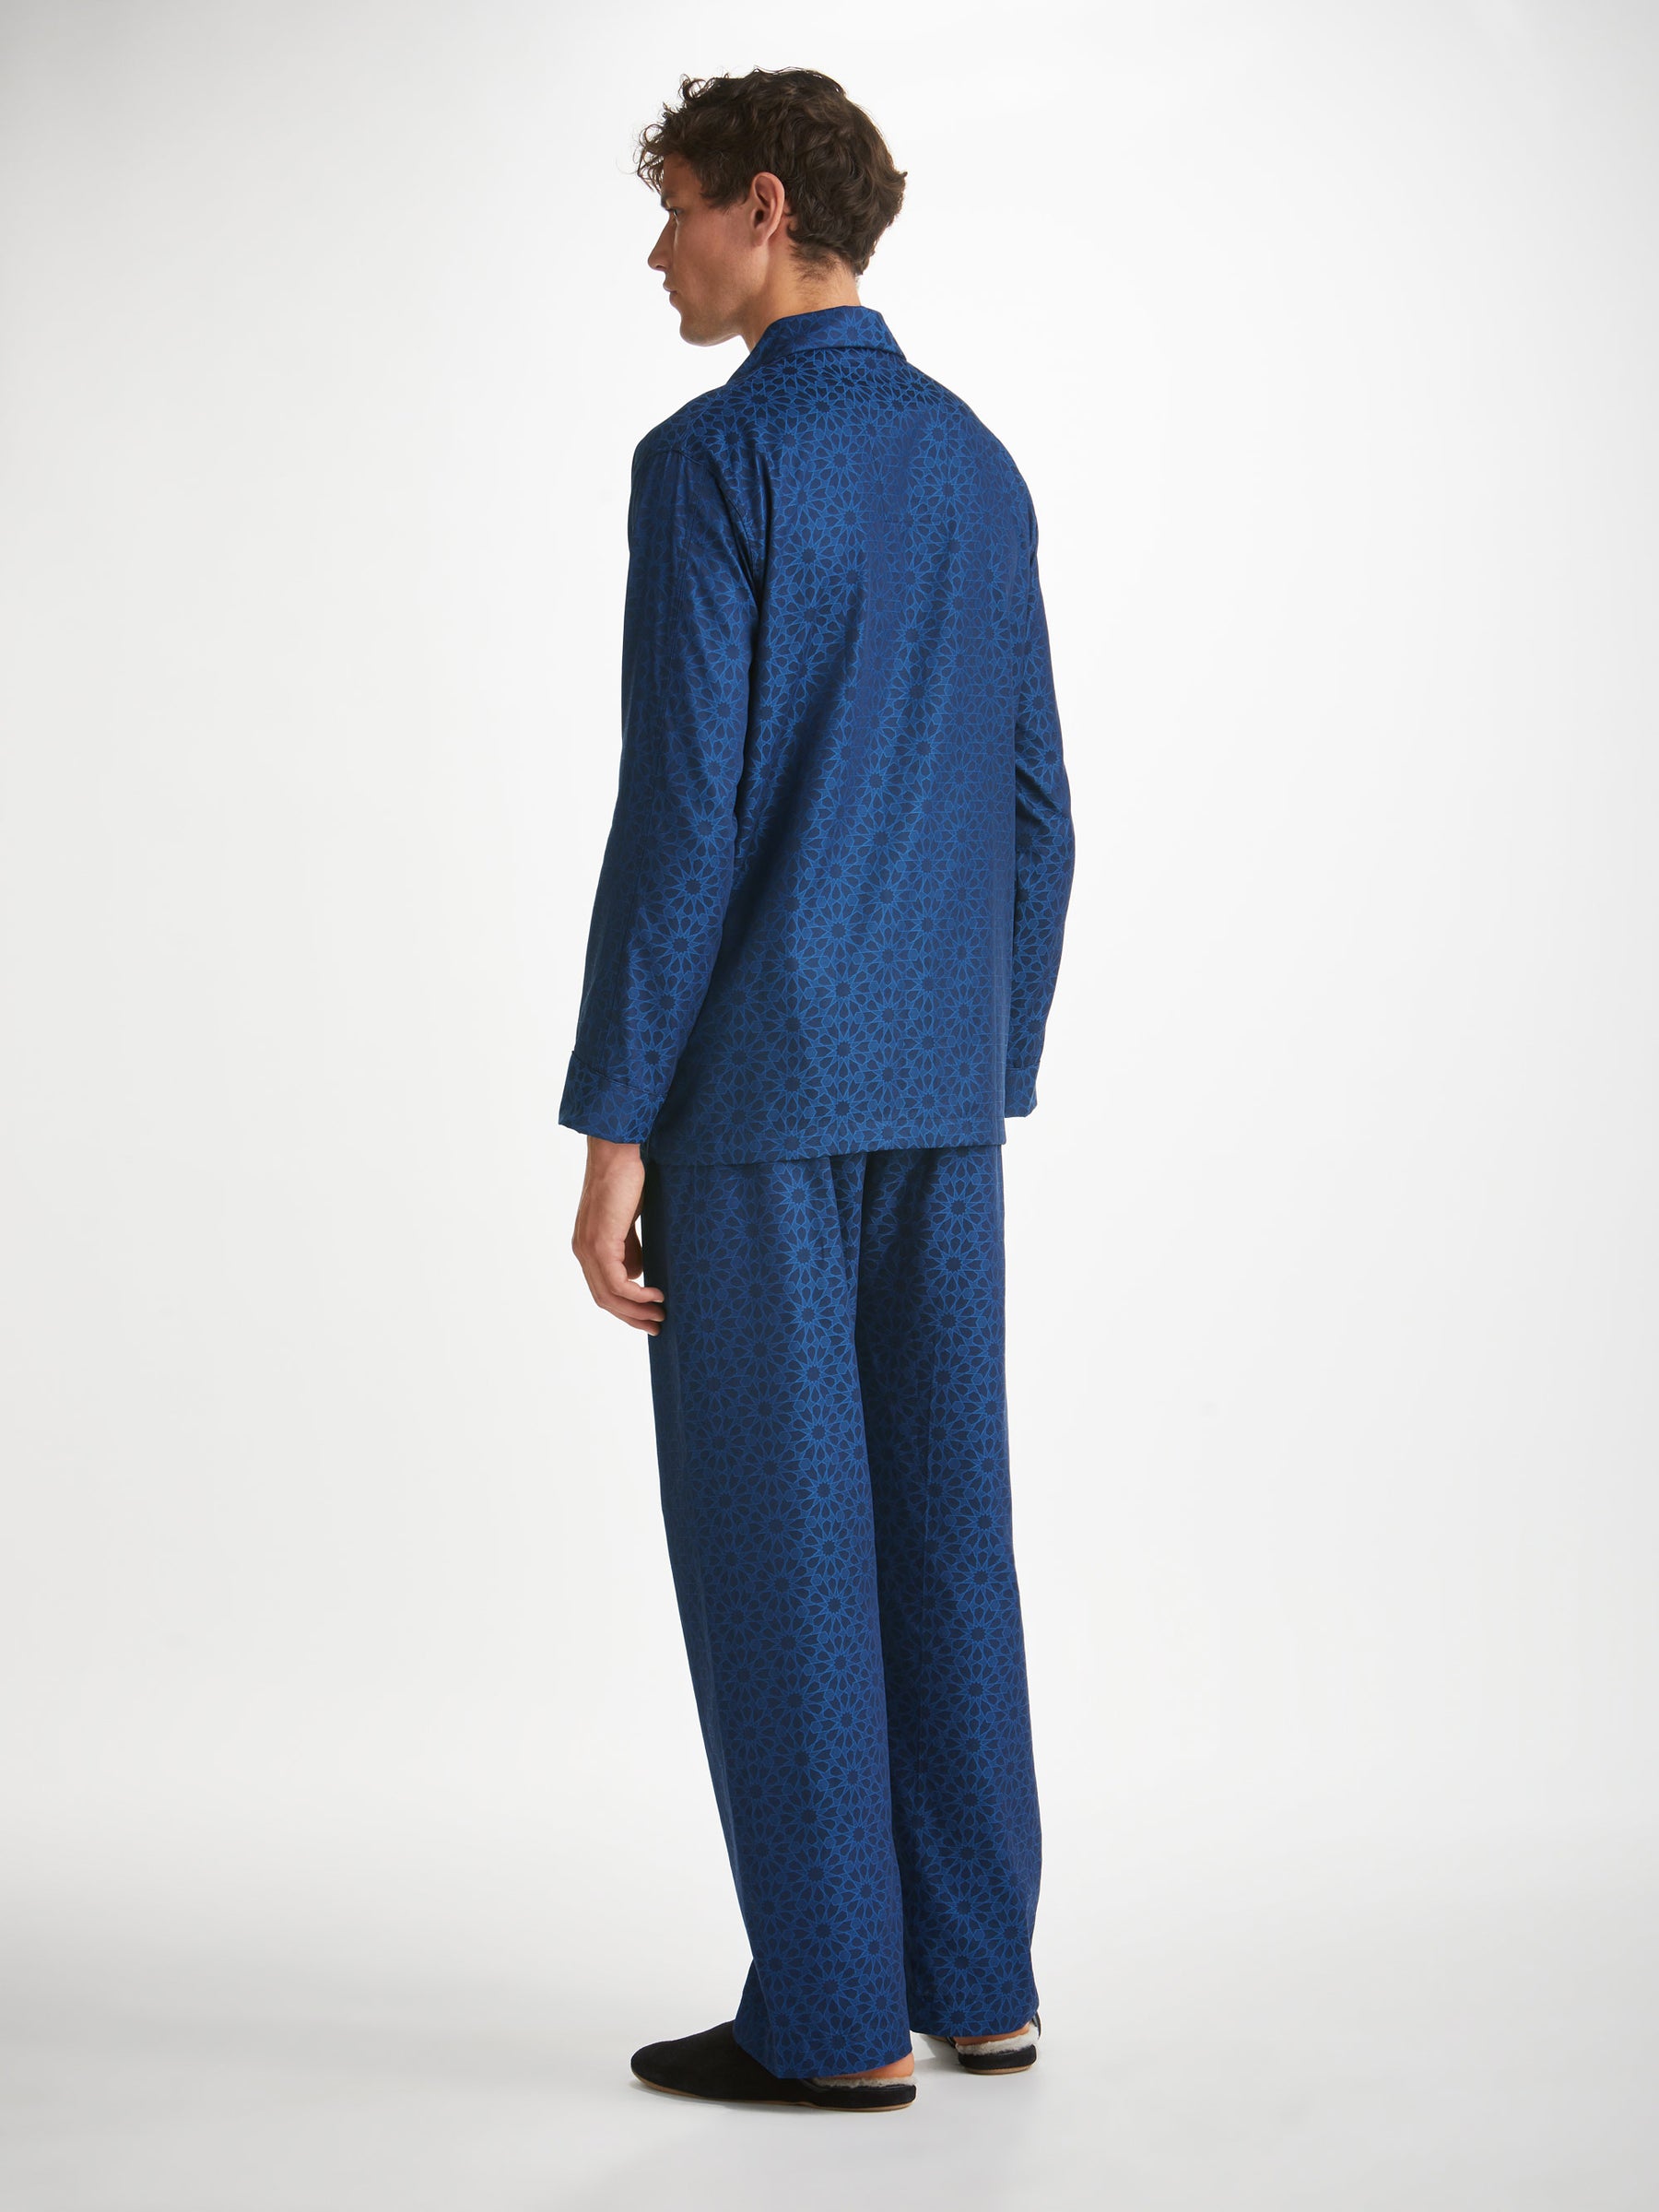 Men's Classic Fit Pyjamas Paris 26 Cotton Jacquard Navy